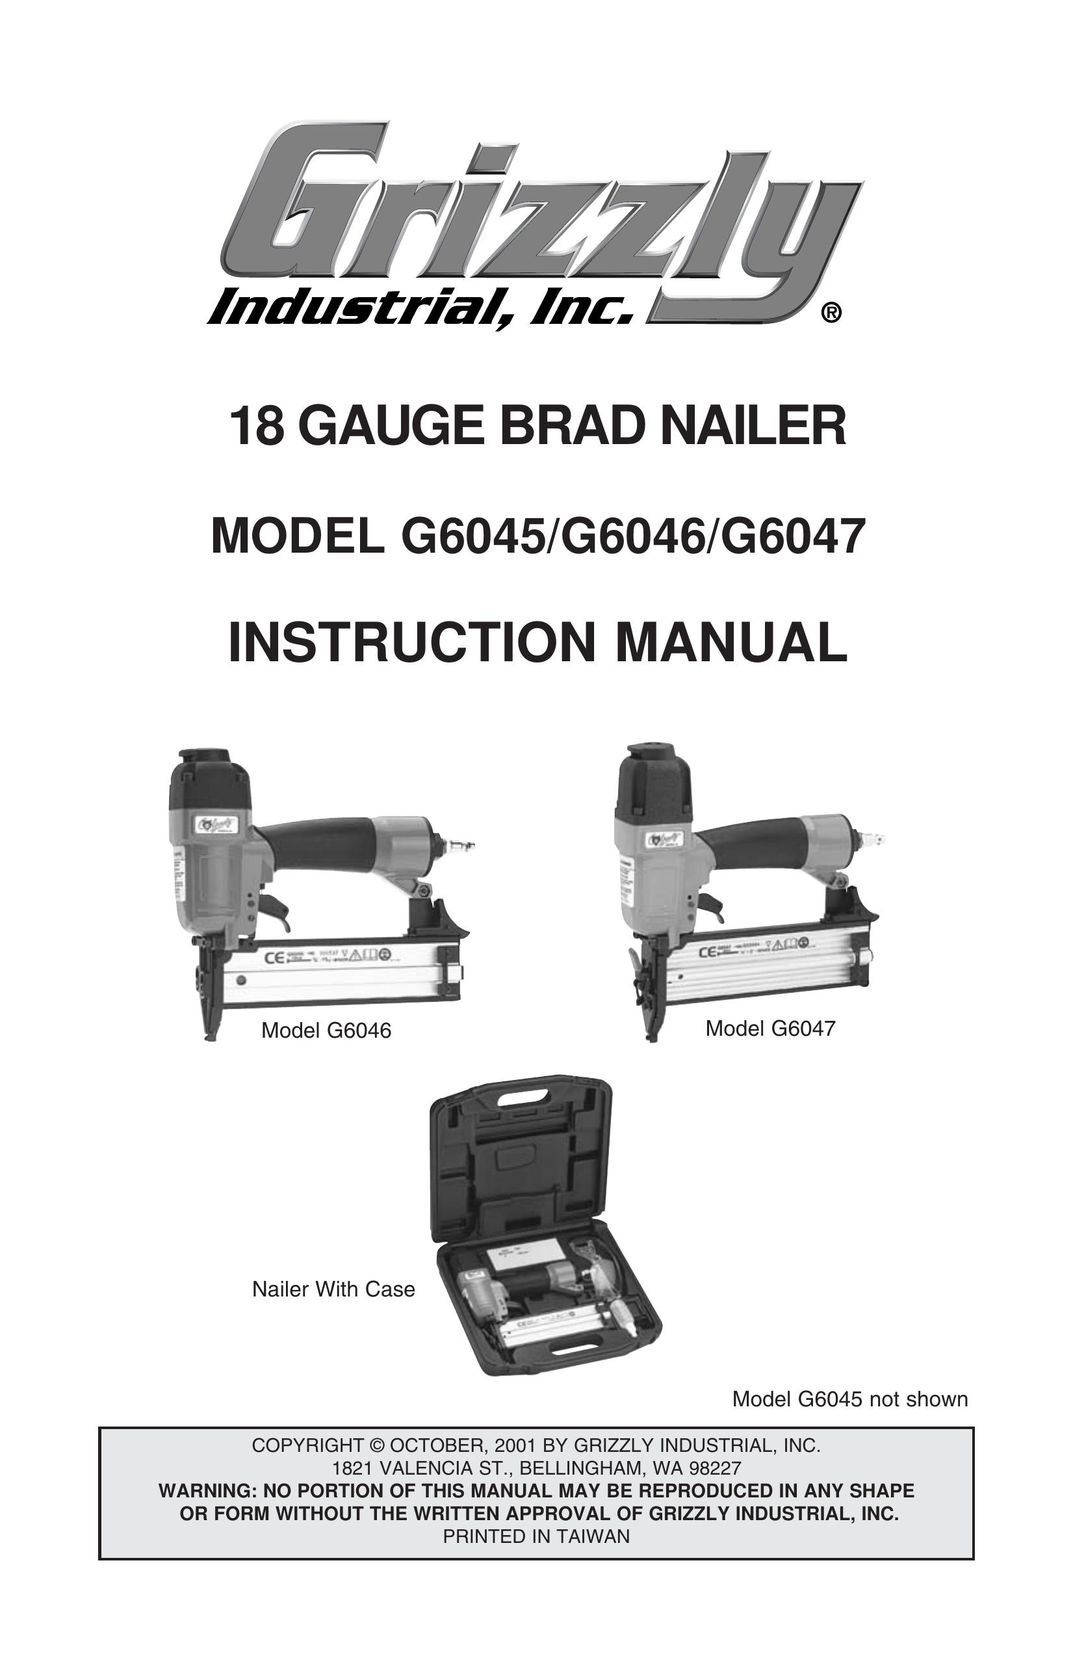 Grizzly G6045 Nail Gun User Manual